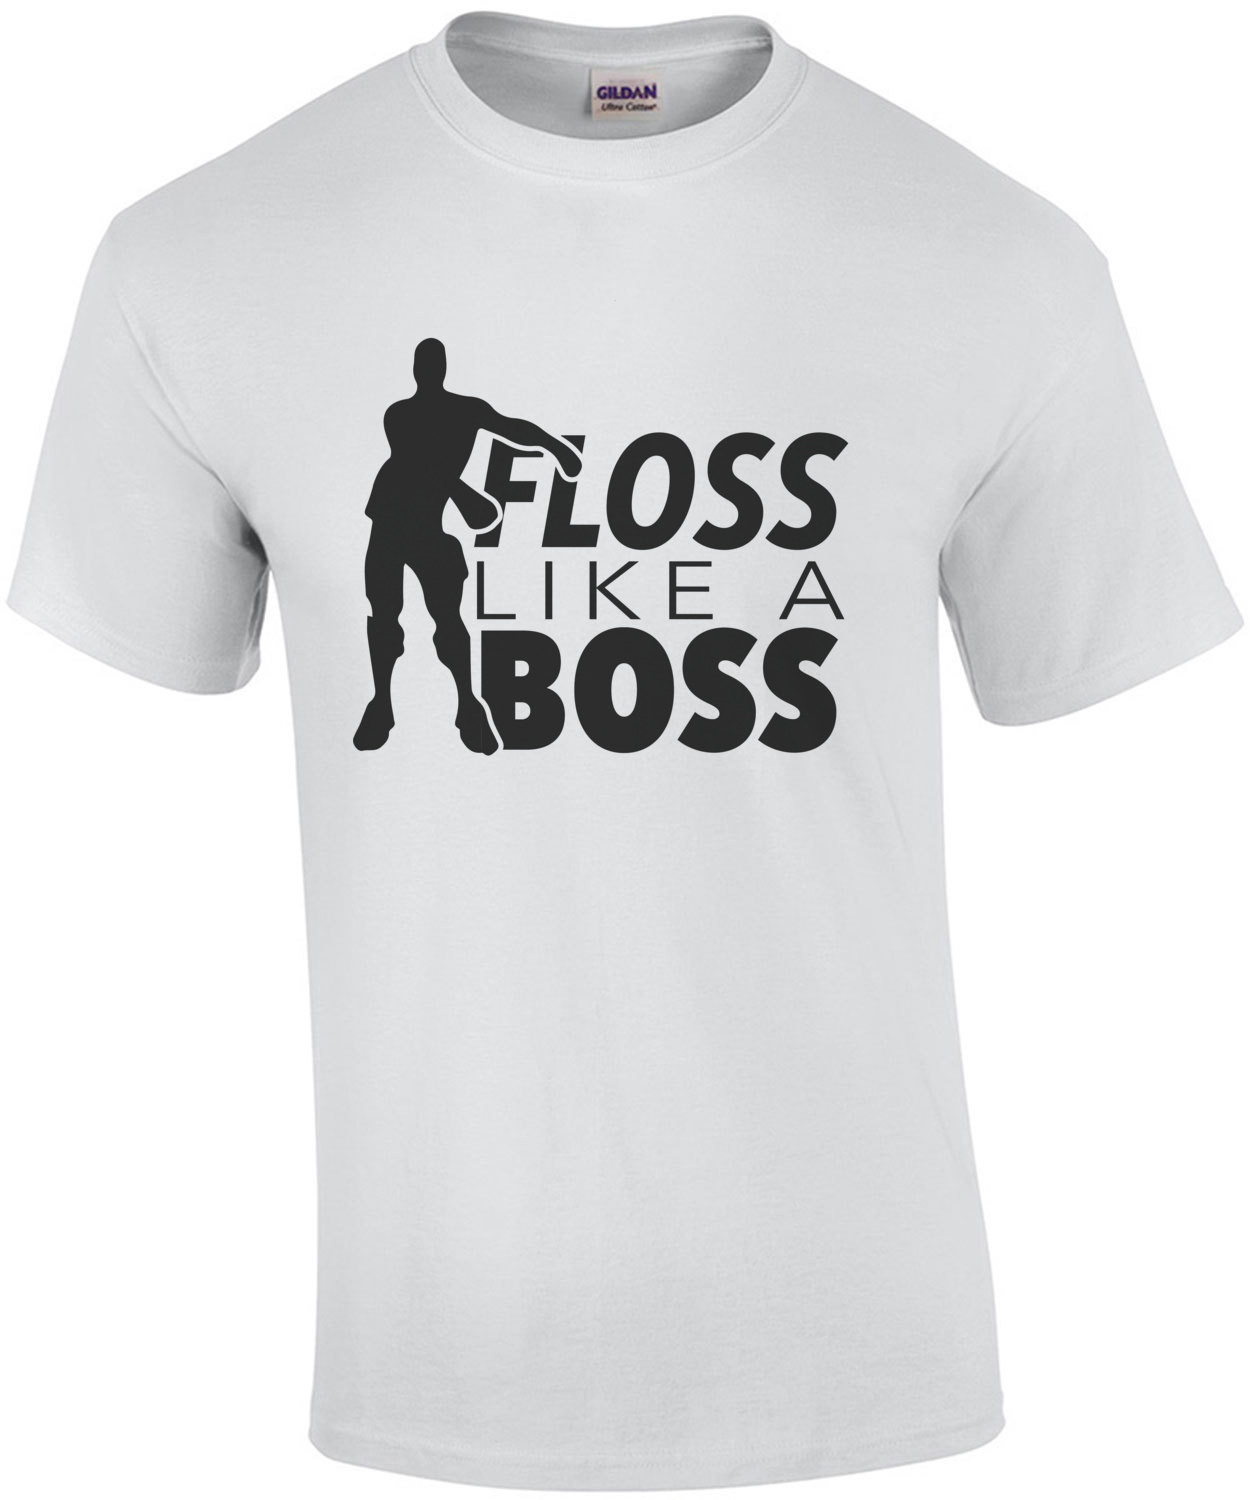 Floss like a boss - funny t-shirt